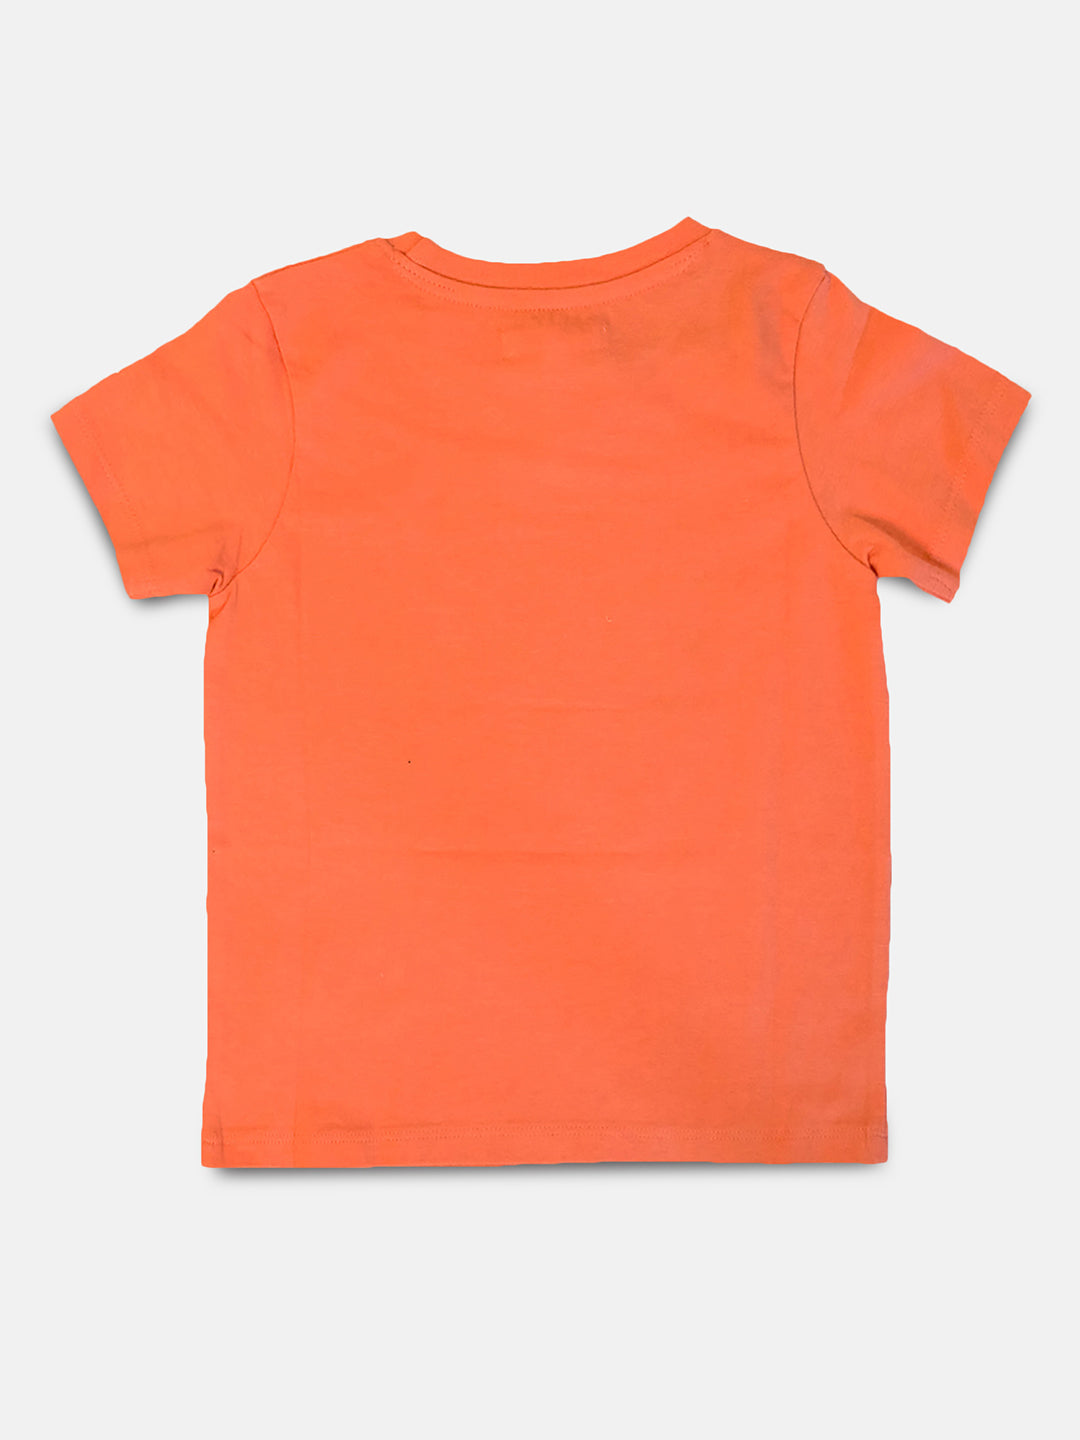 Girls Orange Foil Printed Graphic T-Shirt